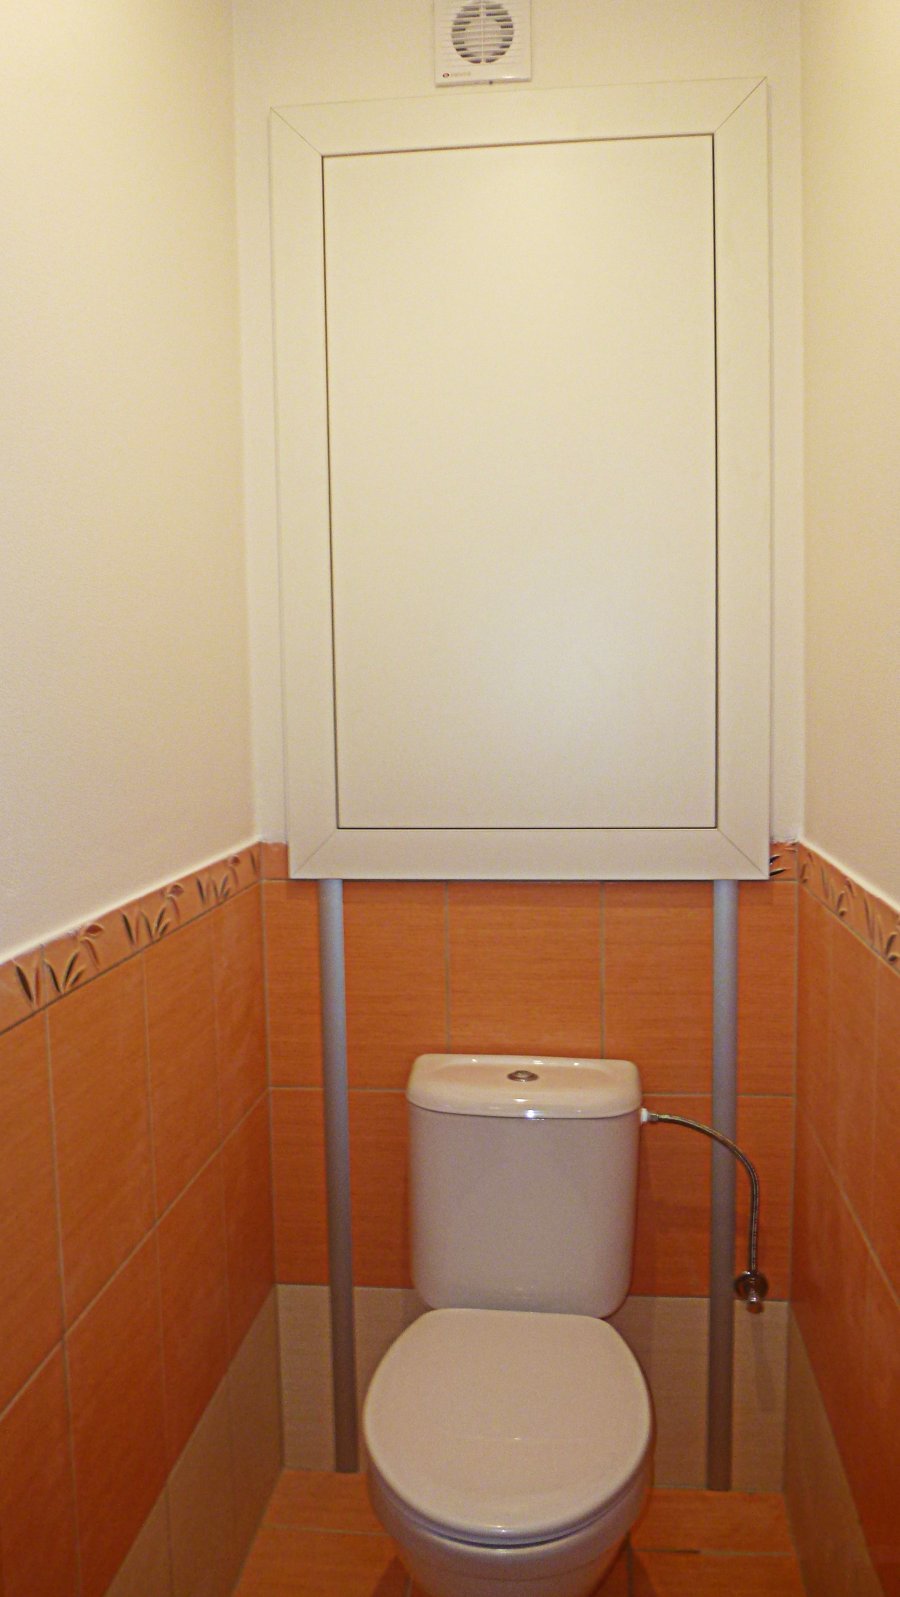 Malá koupelna - WC kombi JIKA Euroline s rovným odpadem a sedátko z termoplastu ZETA